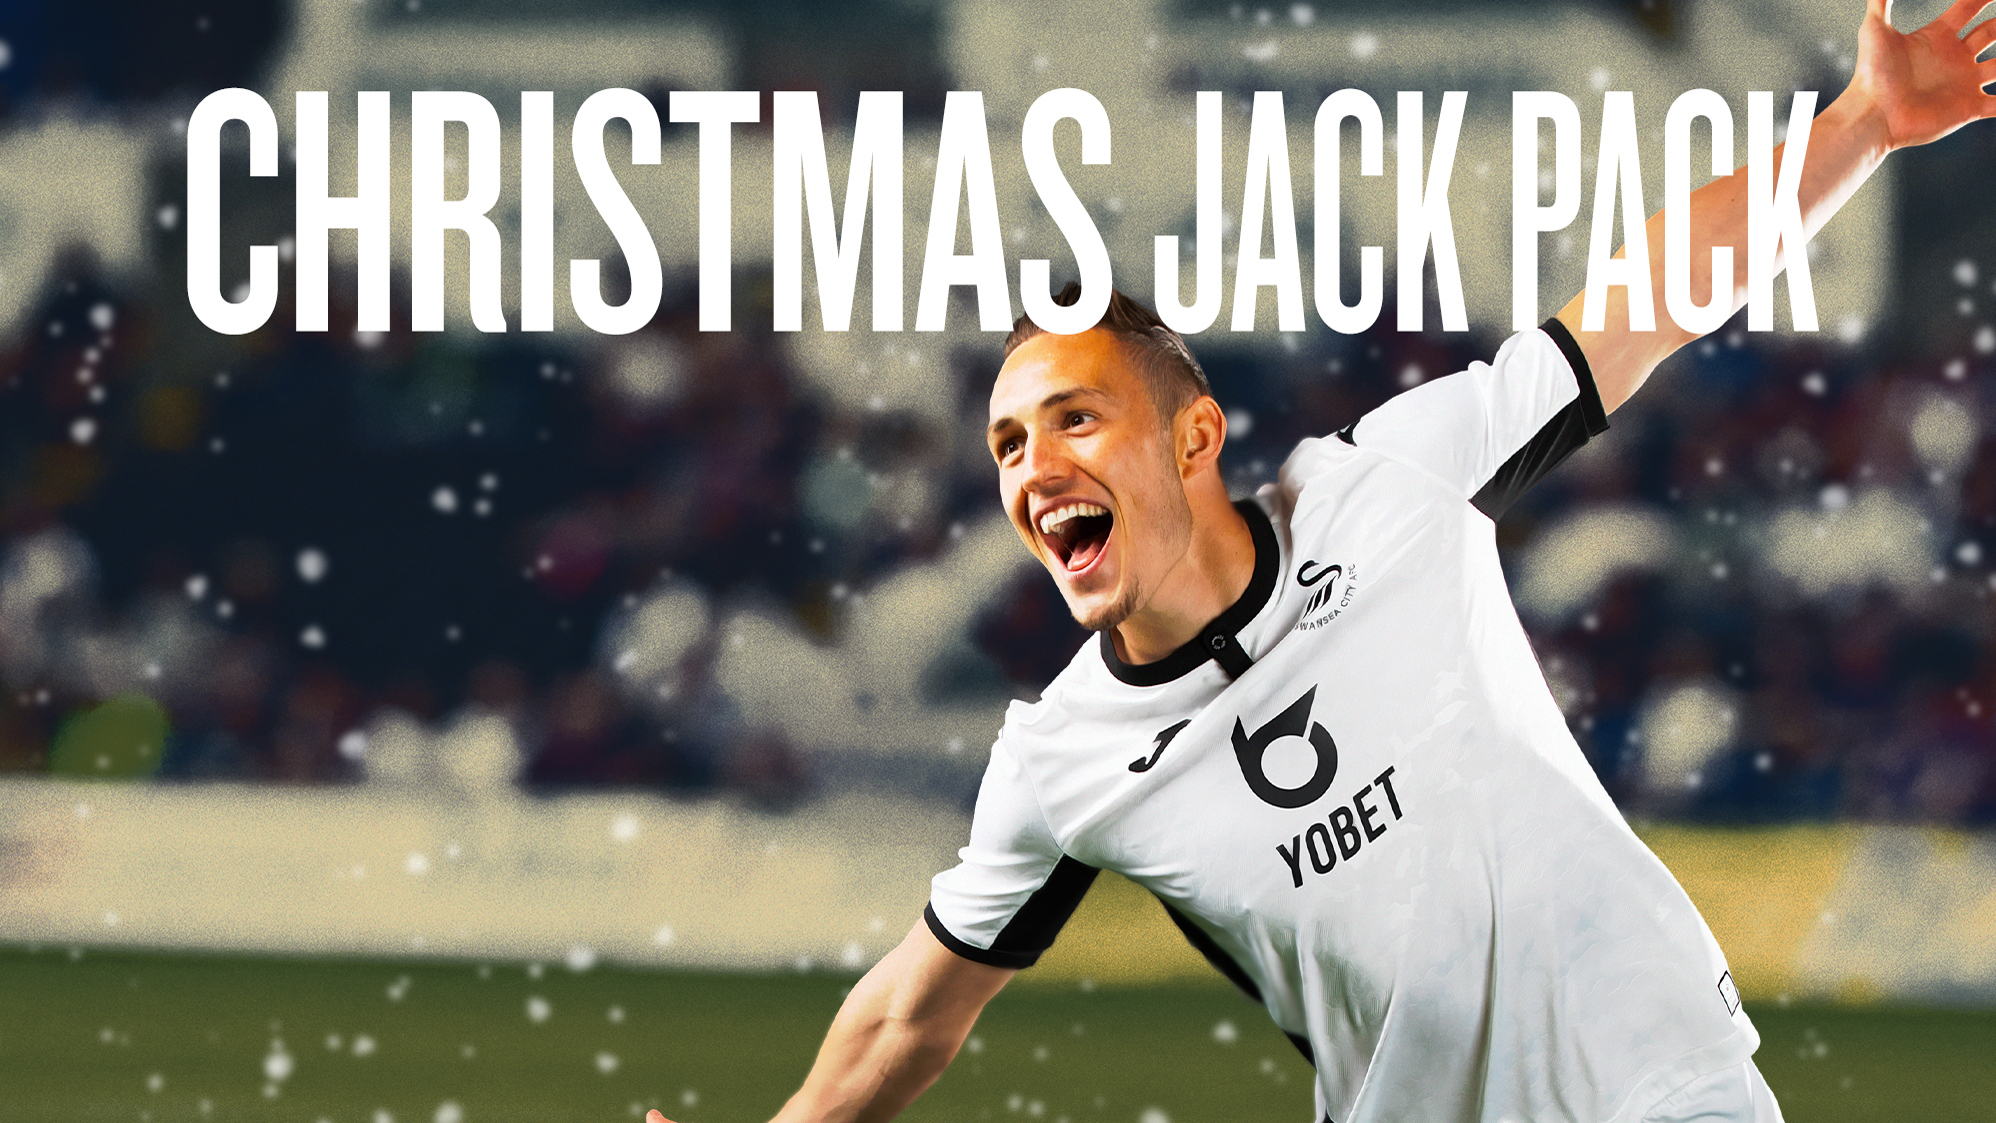 Christmas Jack Pack